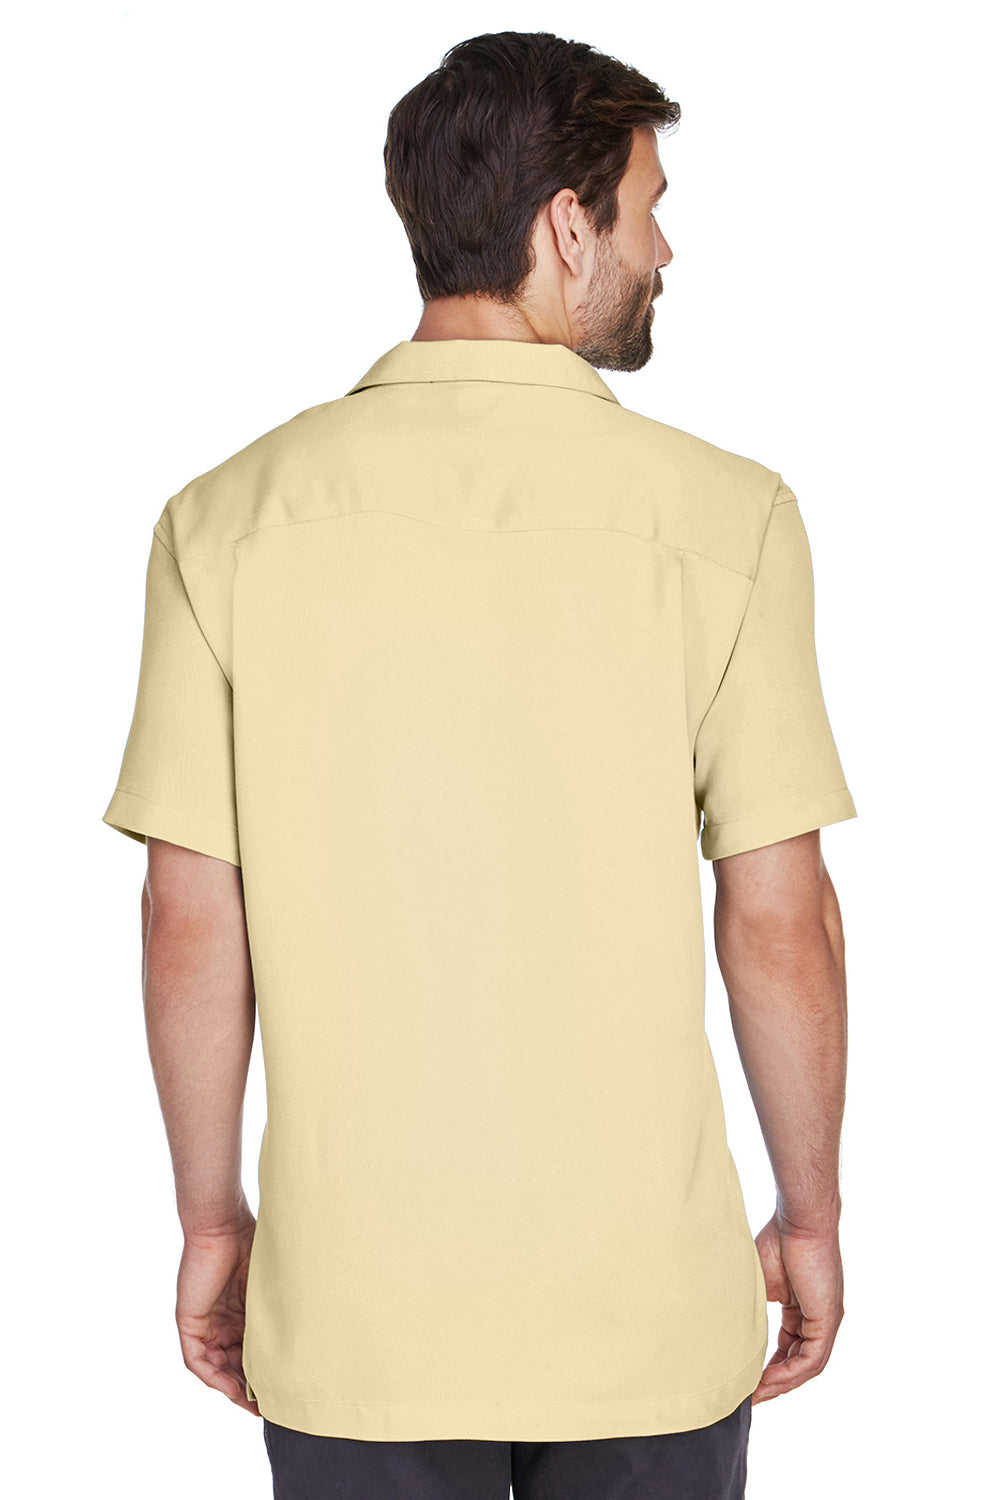 Harriton M570 Mens Bahama Wrinkle Resistant Short Sleeve Button Down Camp Shirt w/ Pocket Sand Brown Back